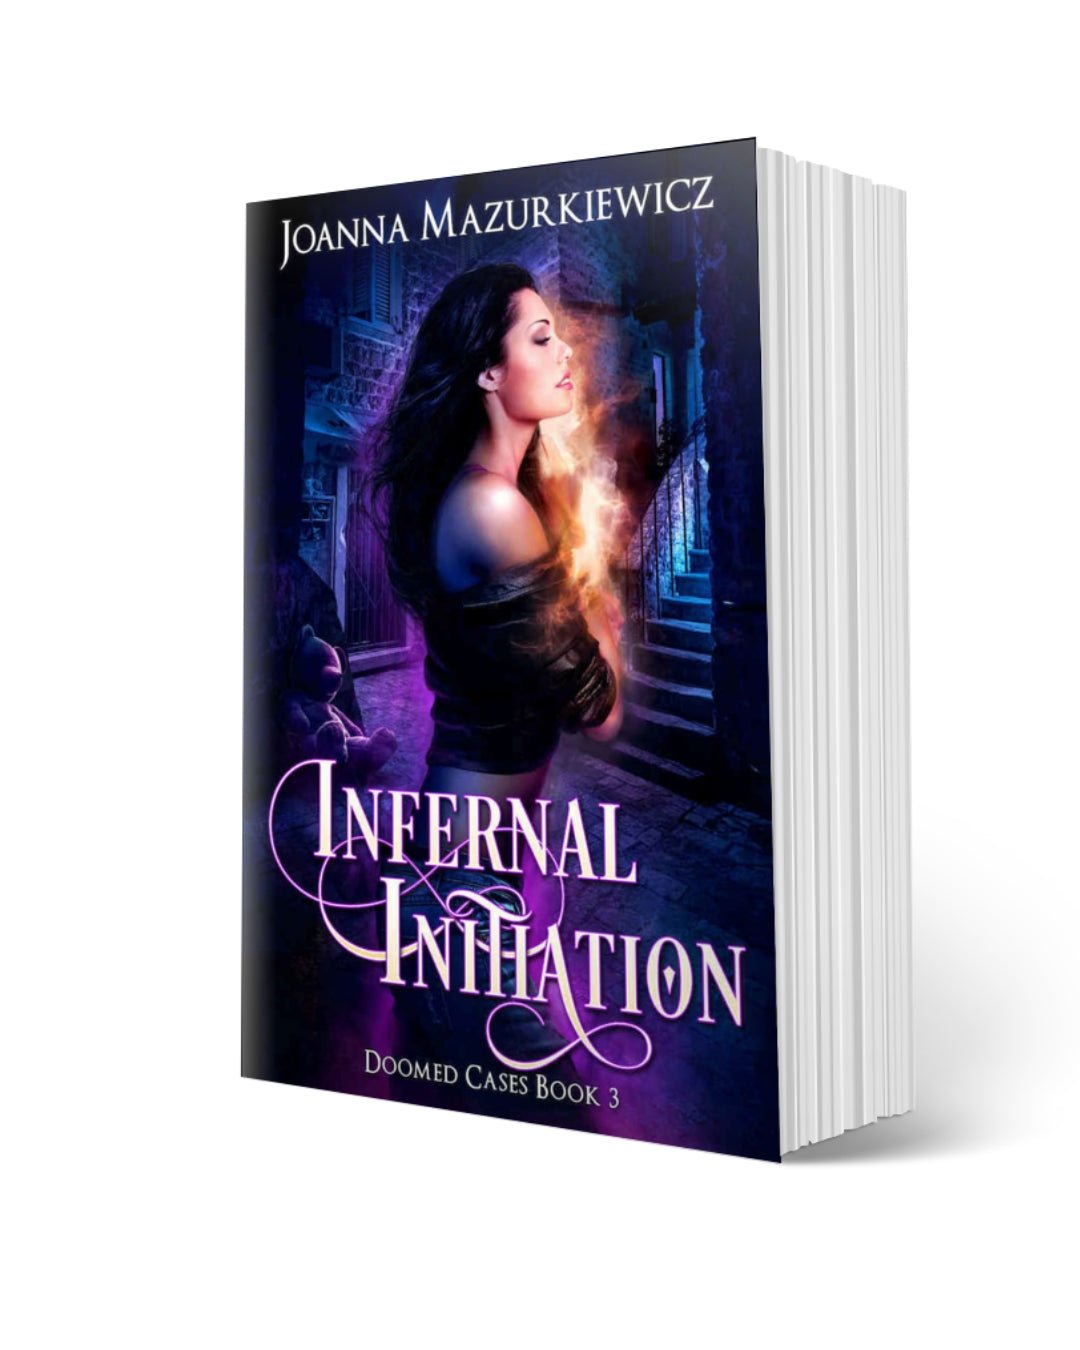 Paperback Copy of Infernal Initiation (Doomed Cases Book 3) - JMazurkiewiczbookstore